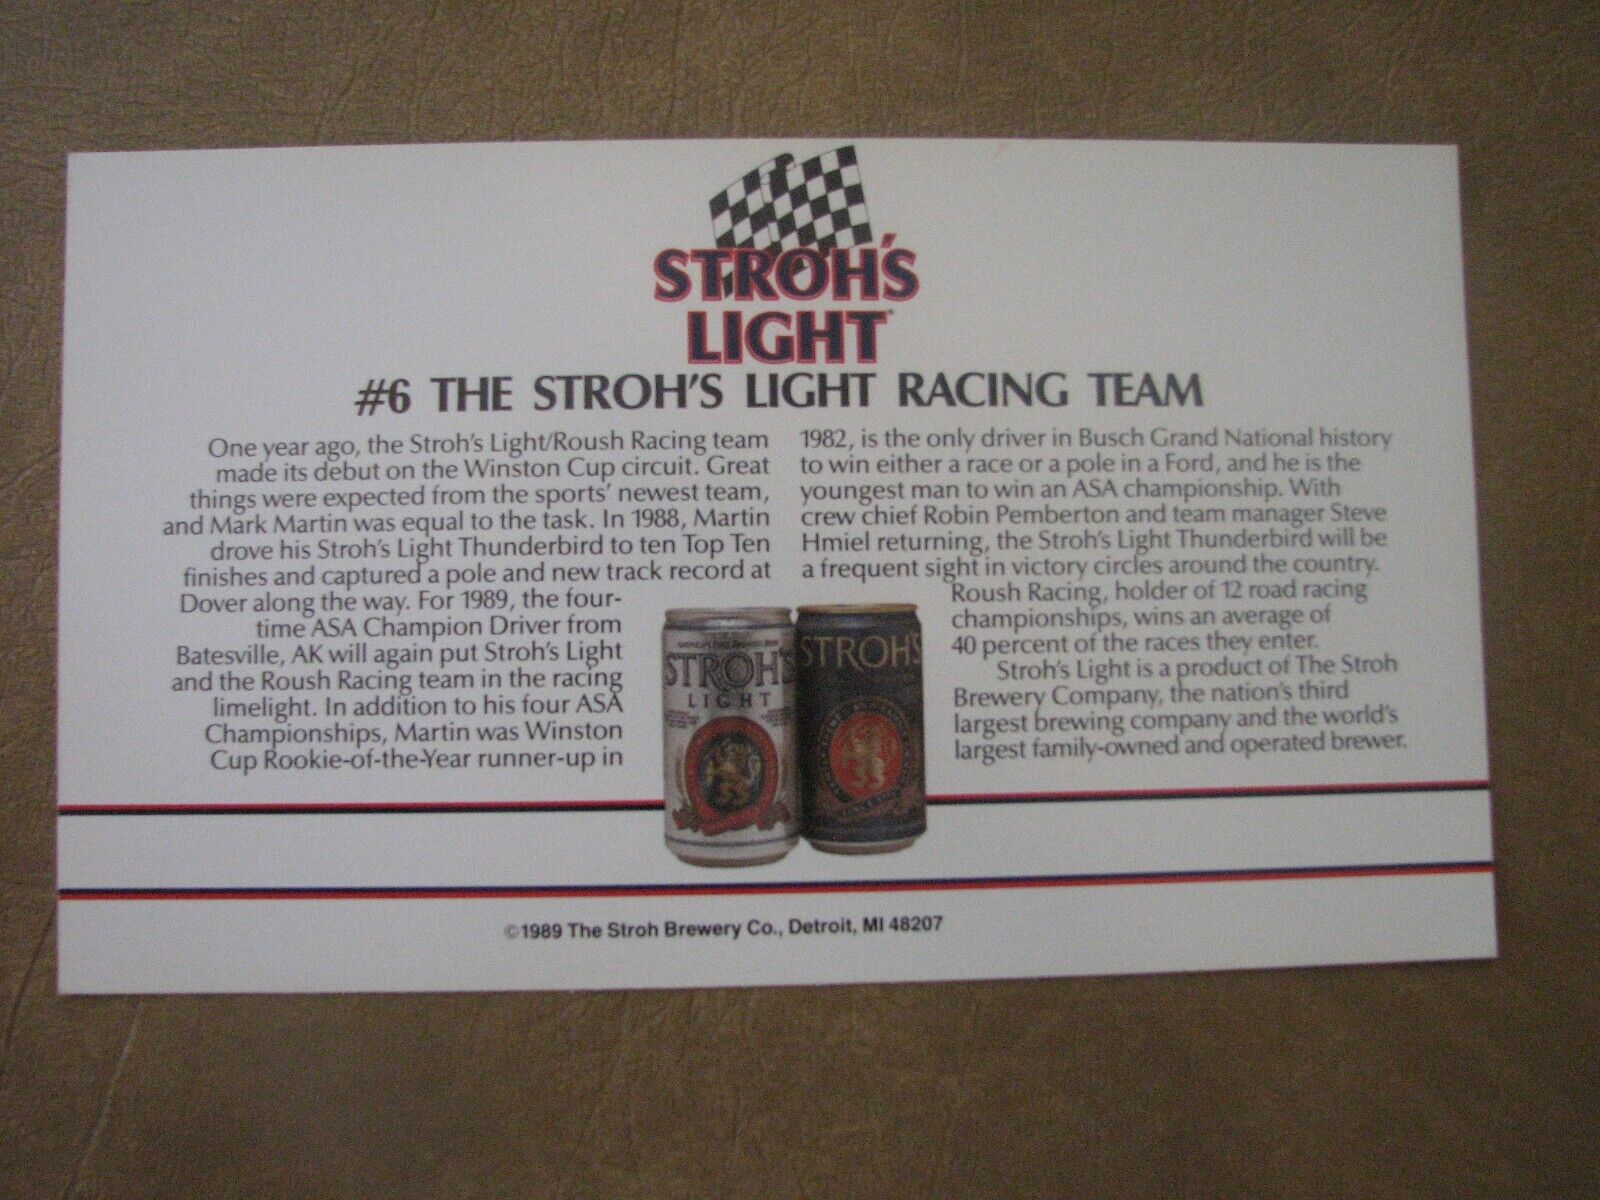 1989 Stroh's Mark Martin #6 Racing Team Photo Card 2 Sided (6 ea in a set) $5.00 Без бренда - фотография #10